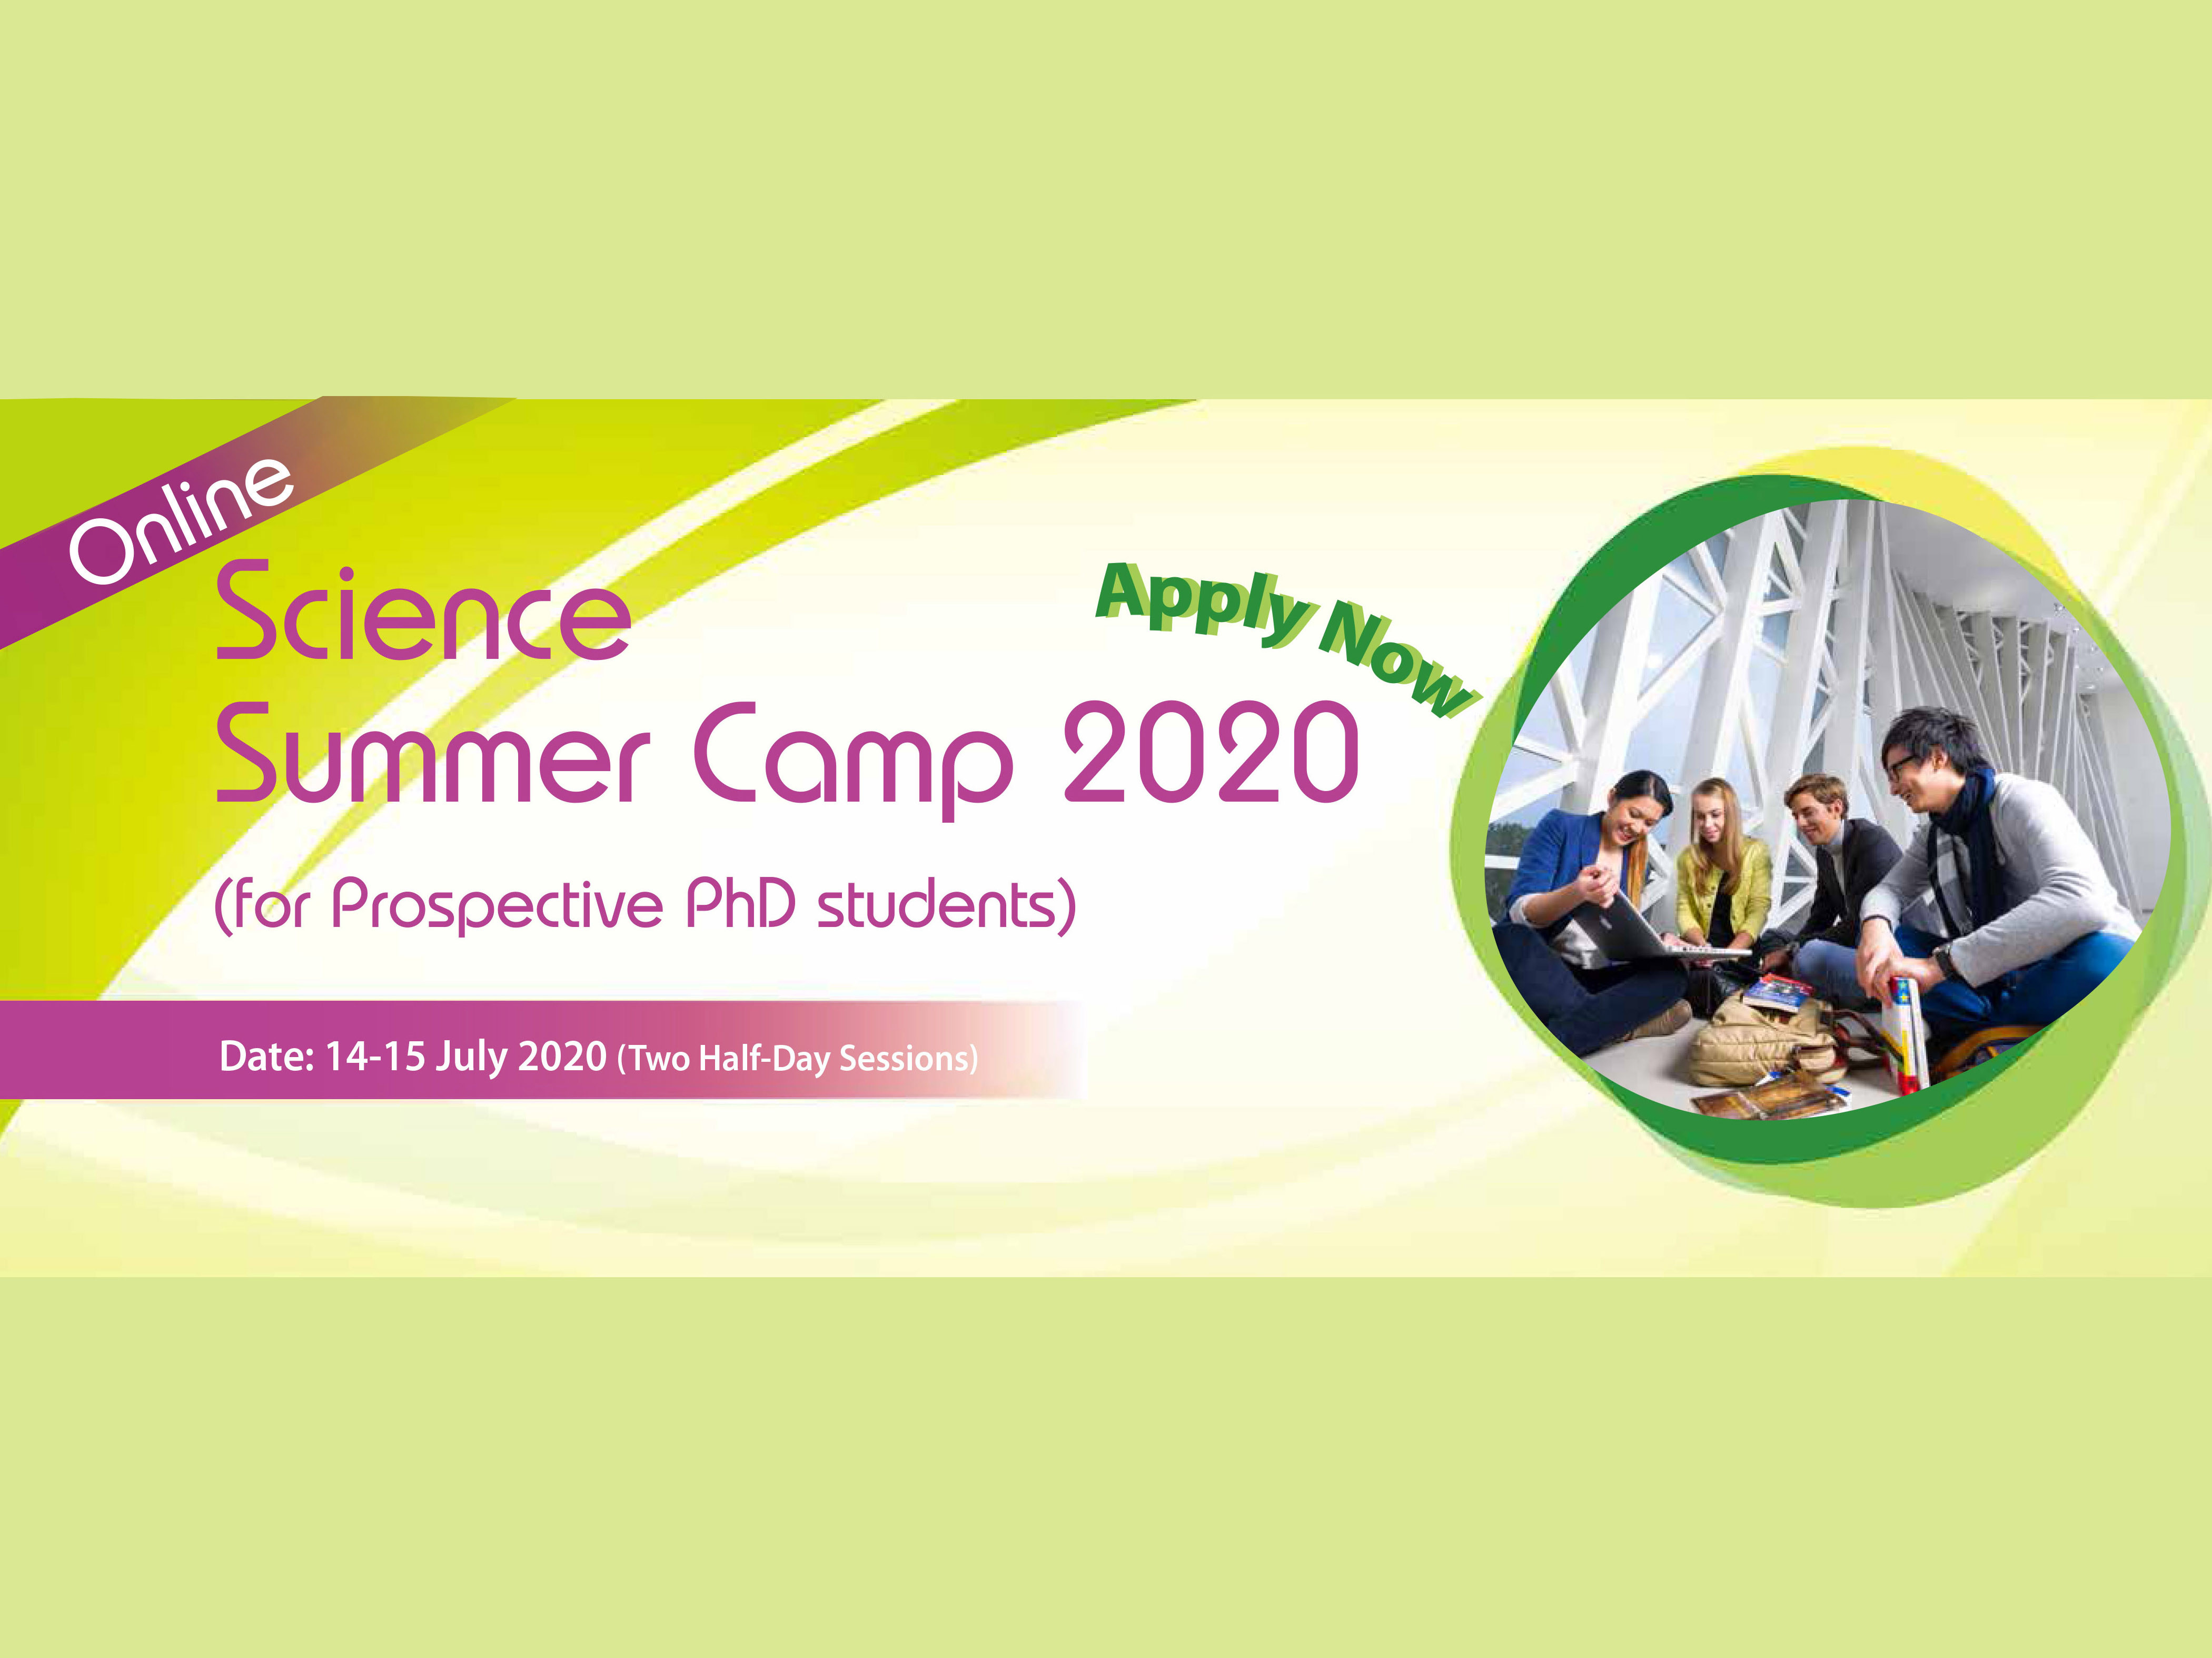 Online Science Summer Camp 2020